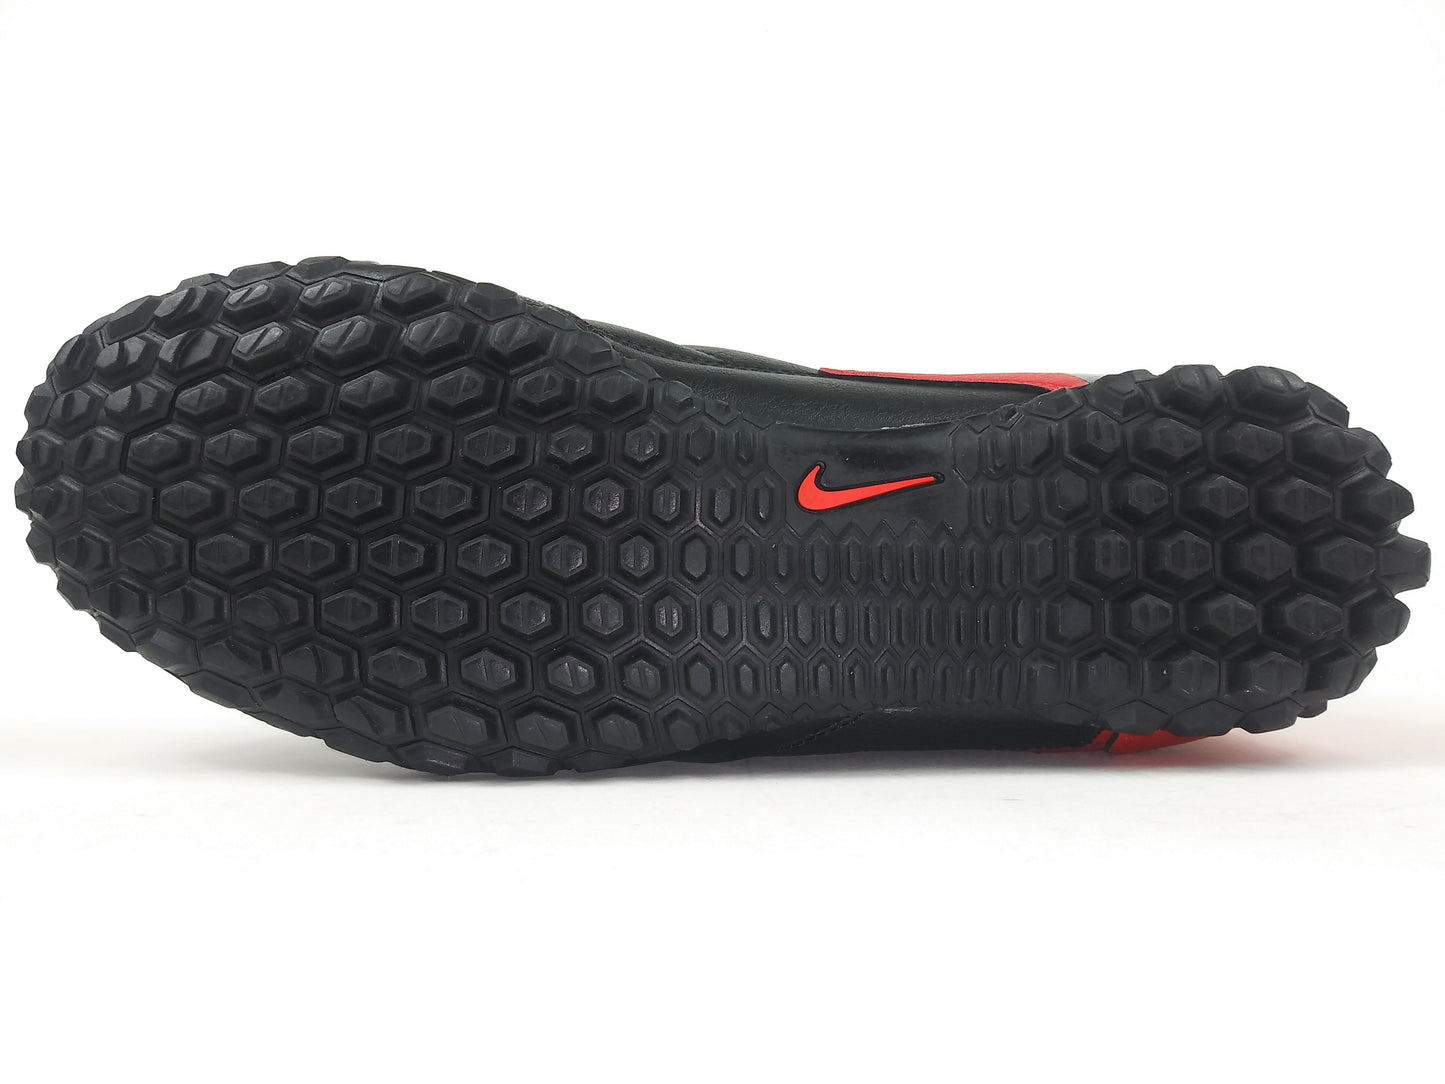 Nike Nike5 Bomba Turf Black Red